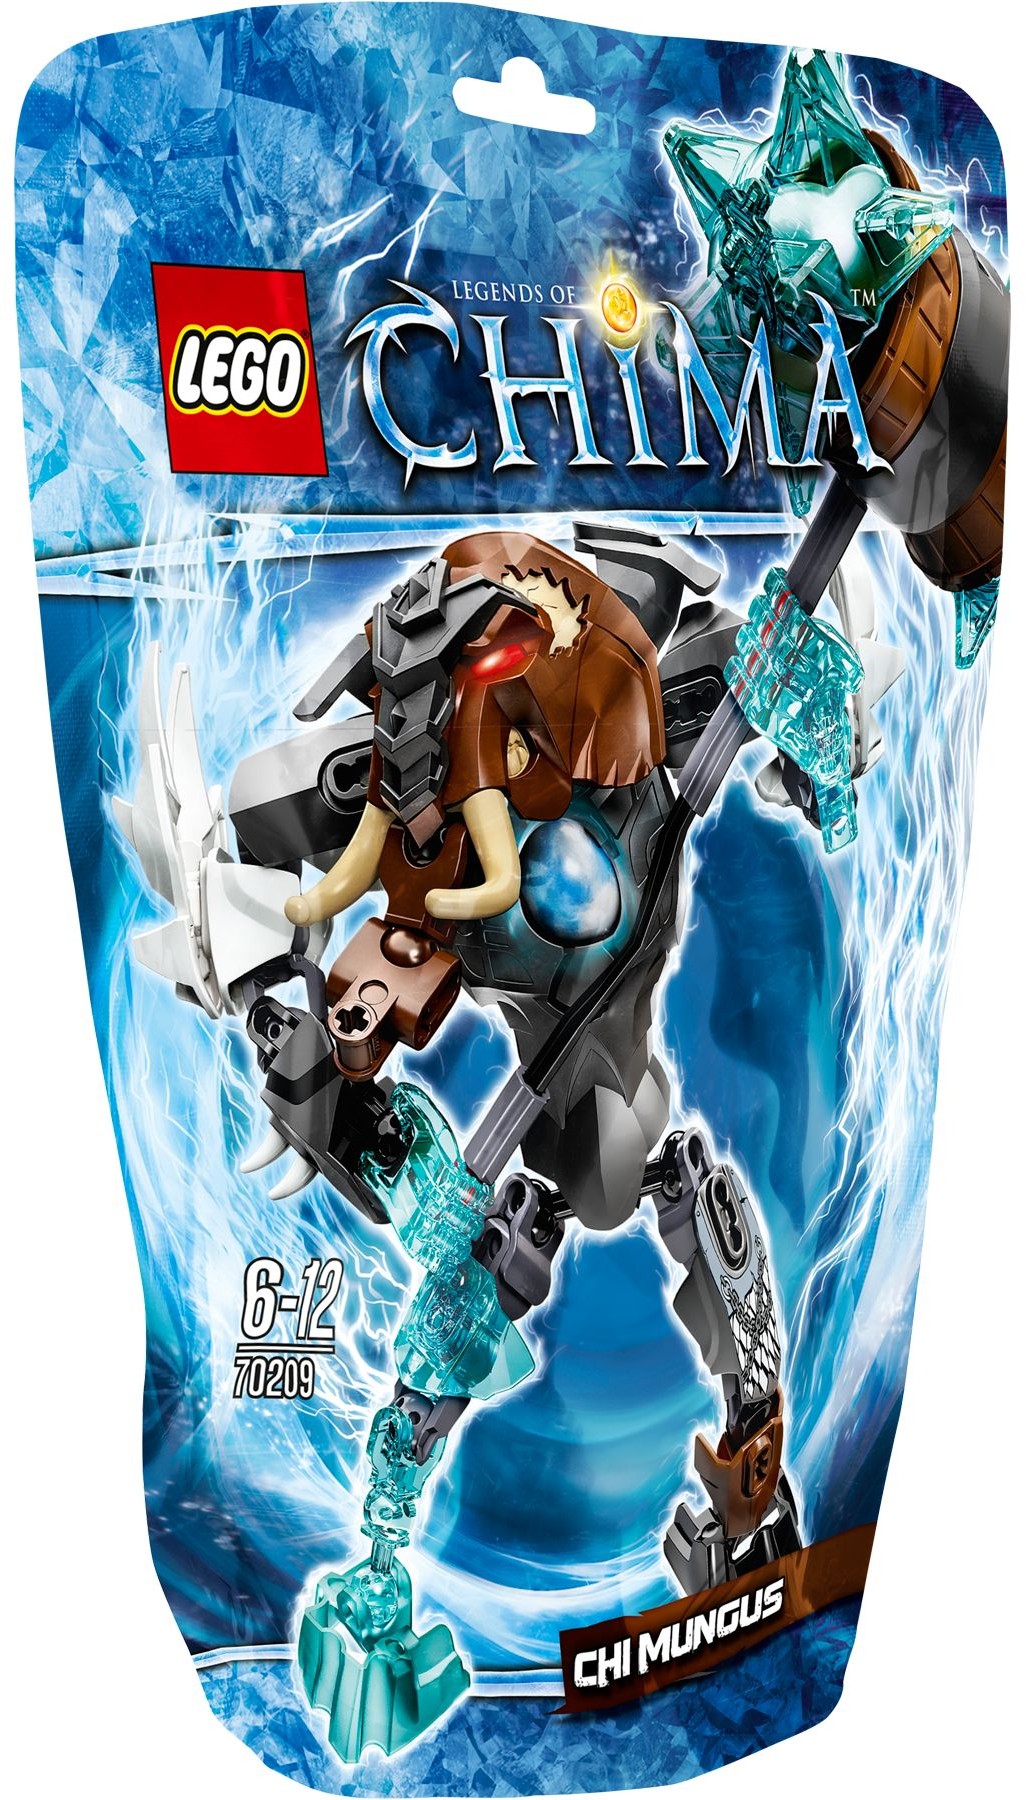 70209 CHI Mungus | LEGO Legends of Chima |